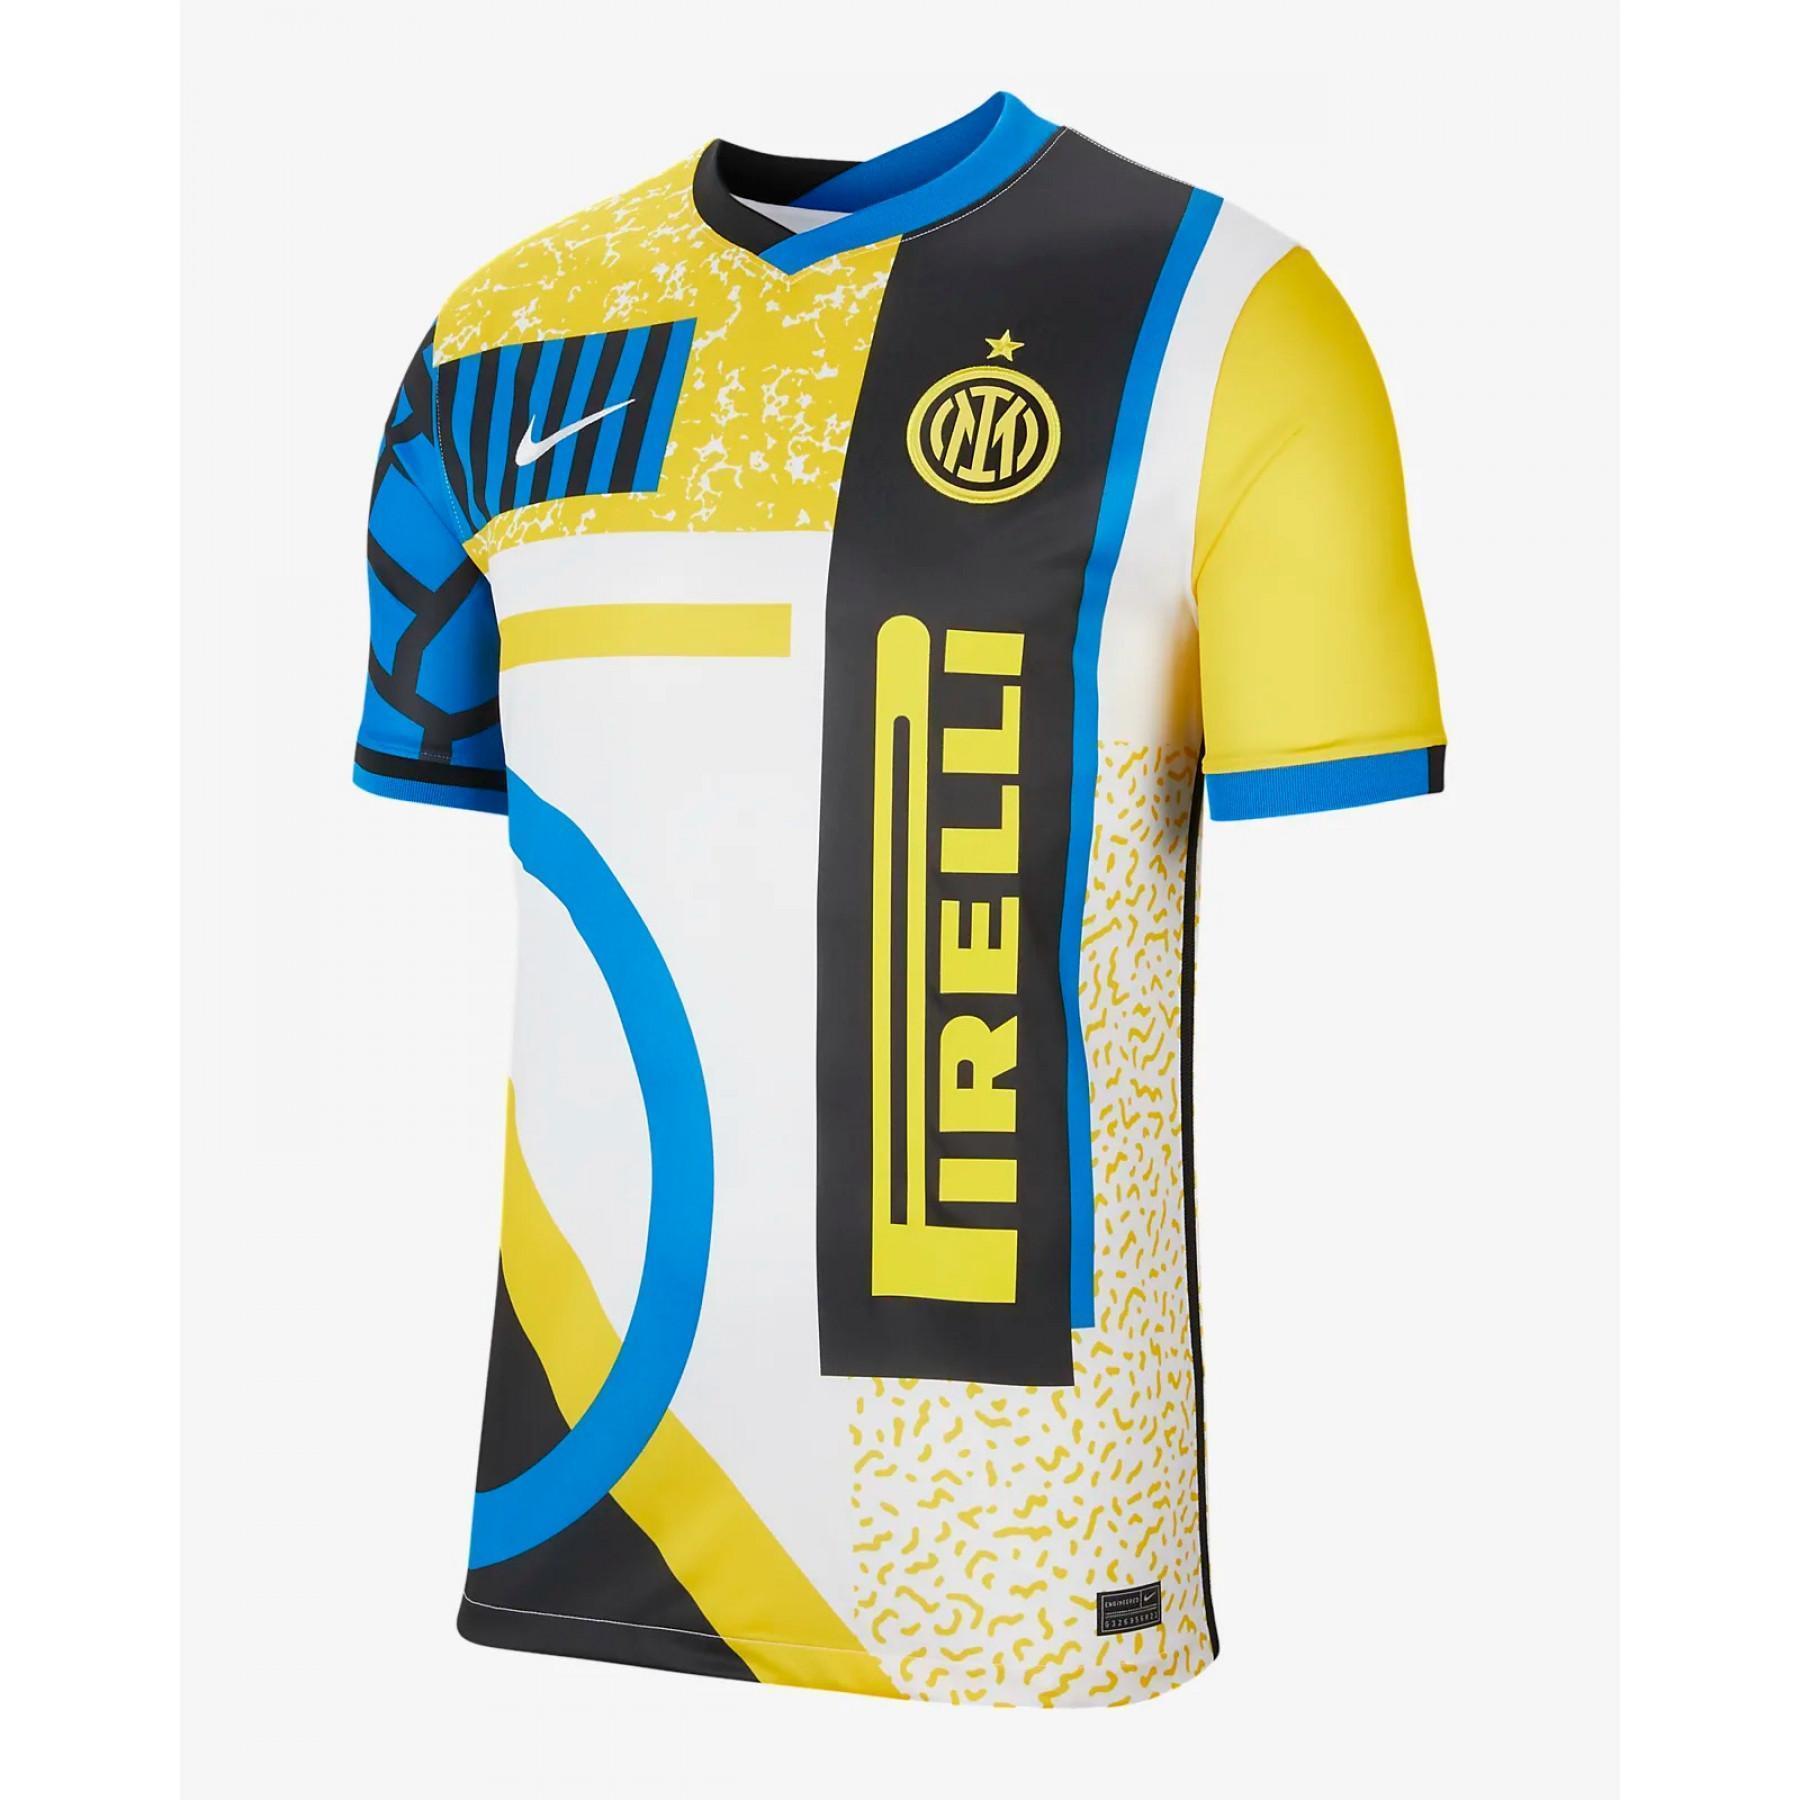 Quarto jersey Inter Milan 2020/21